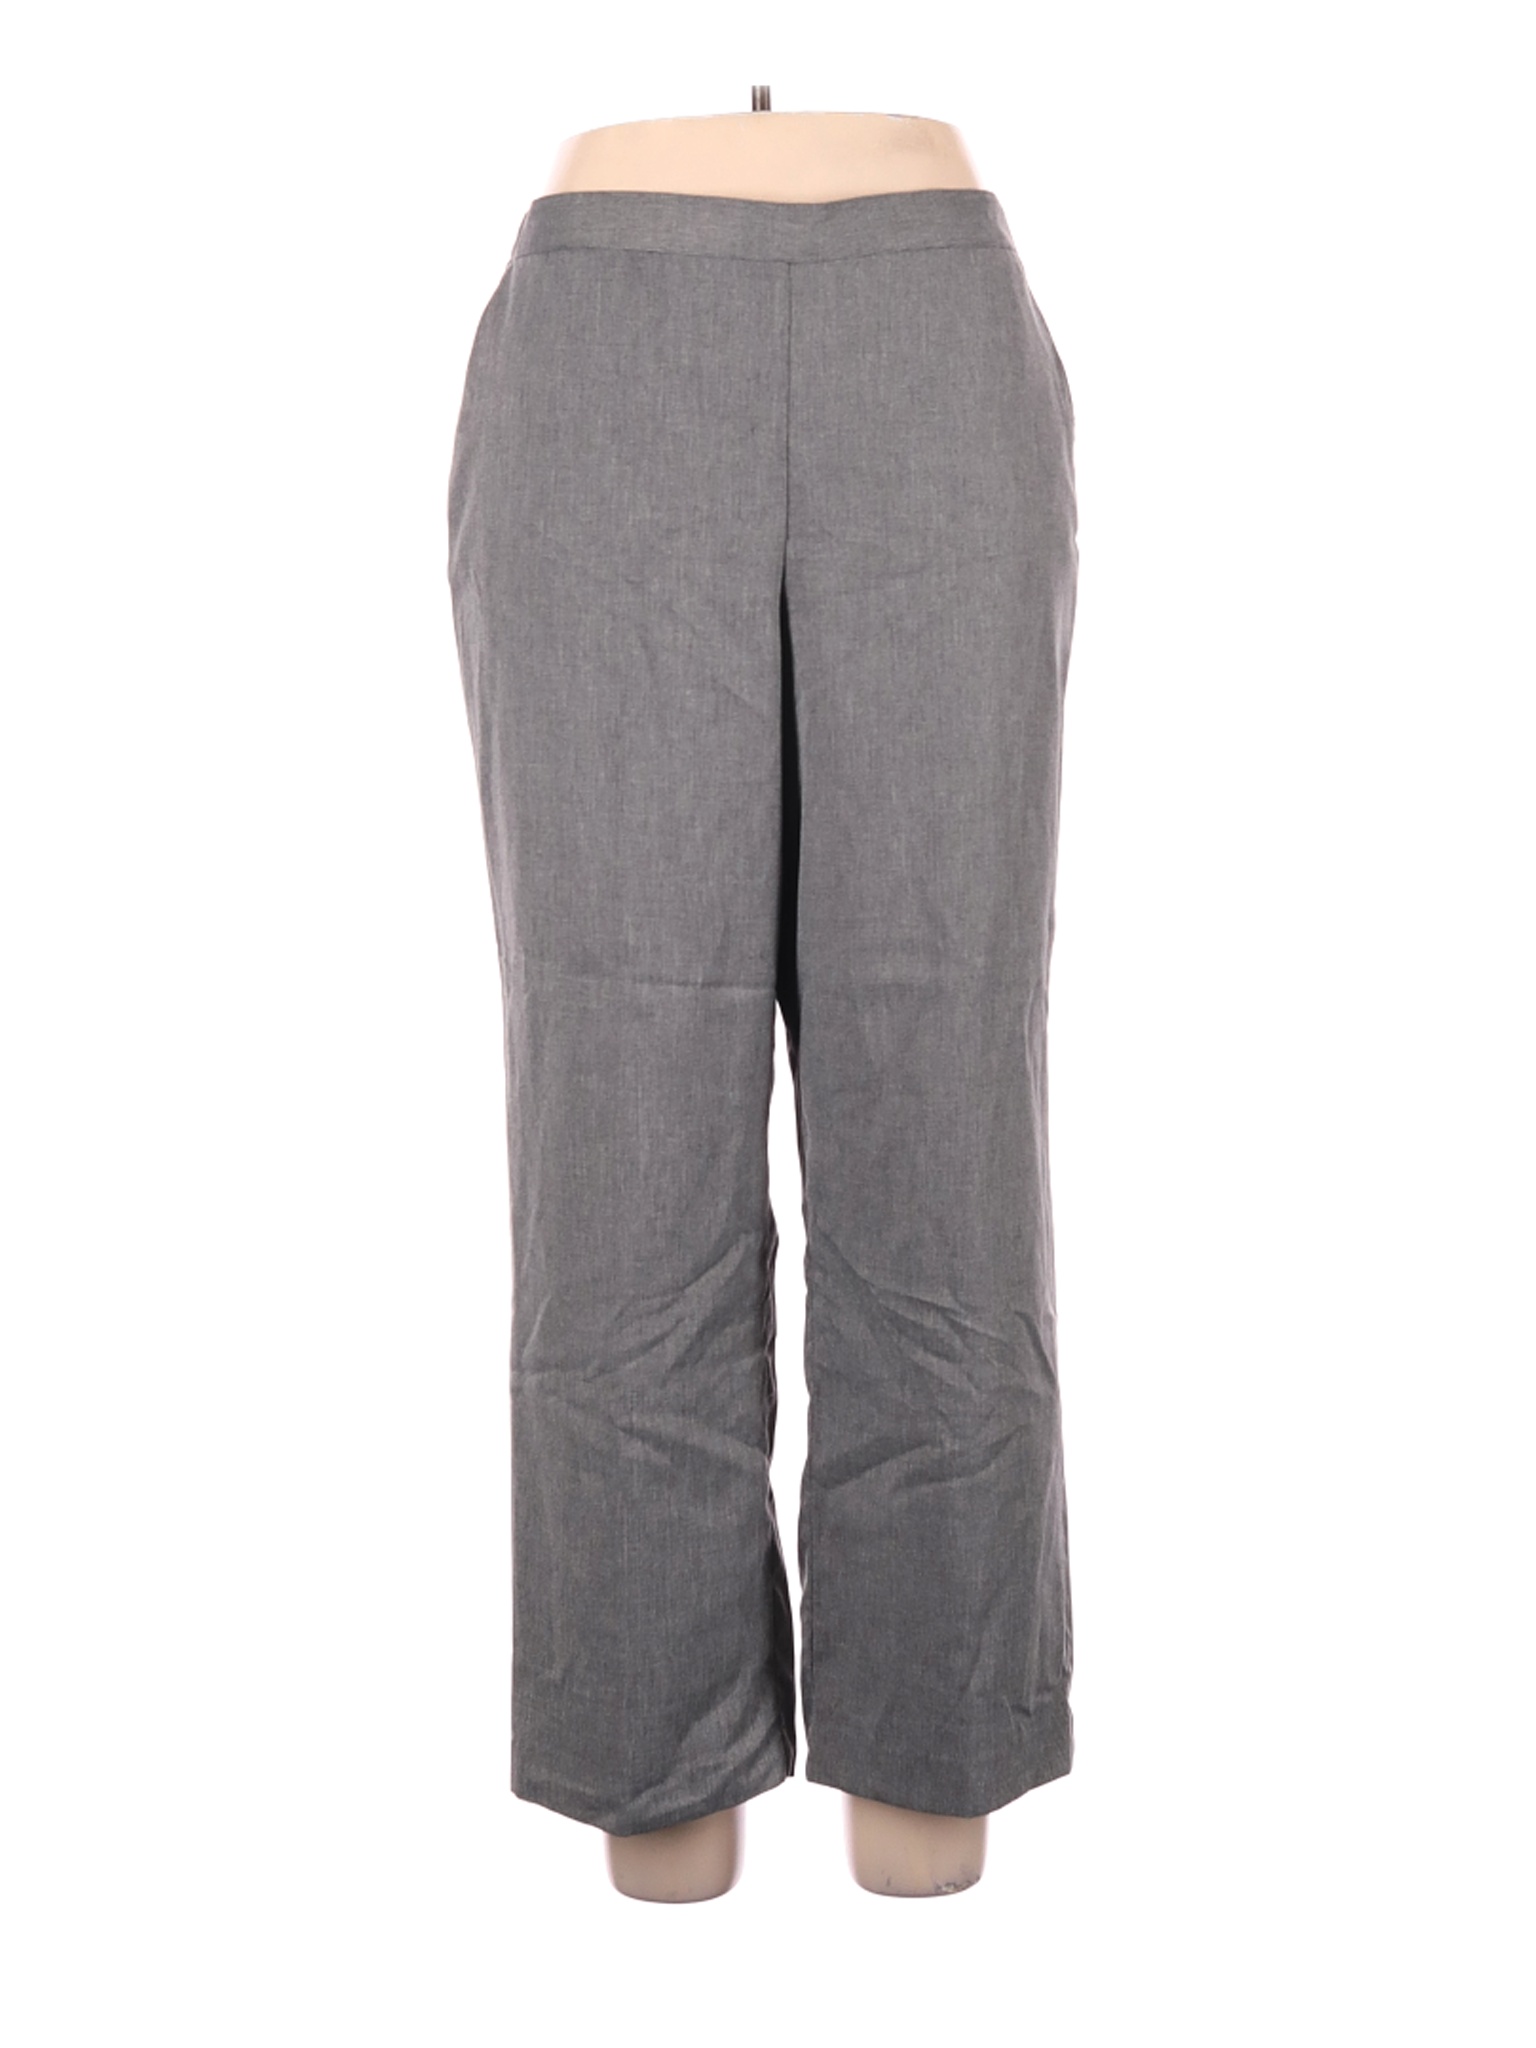 Alfred Dunner Women Gray Dress Pants 16 Petites | eBay